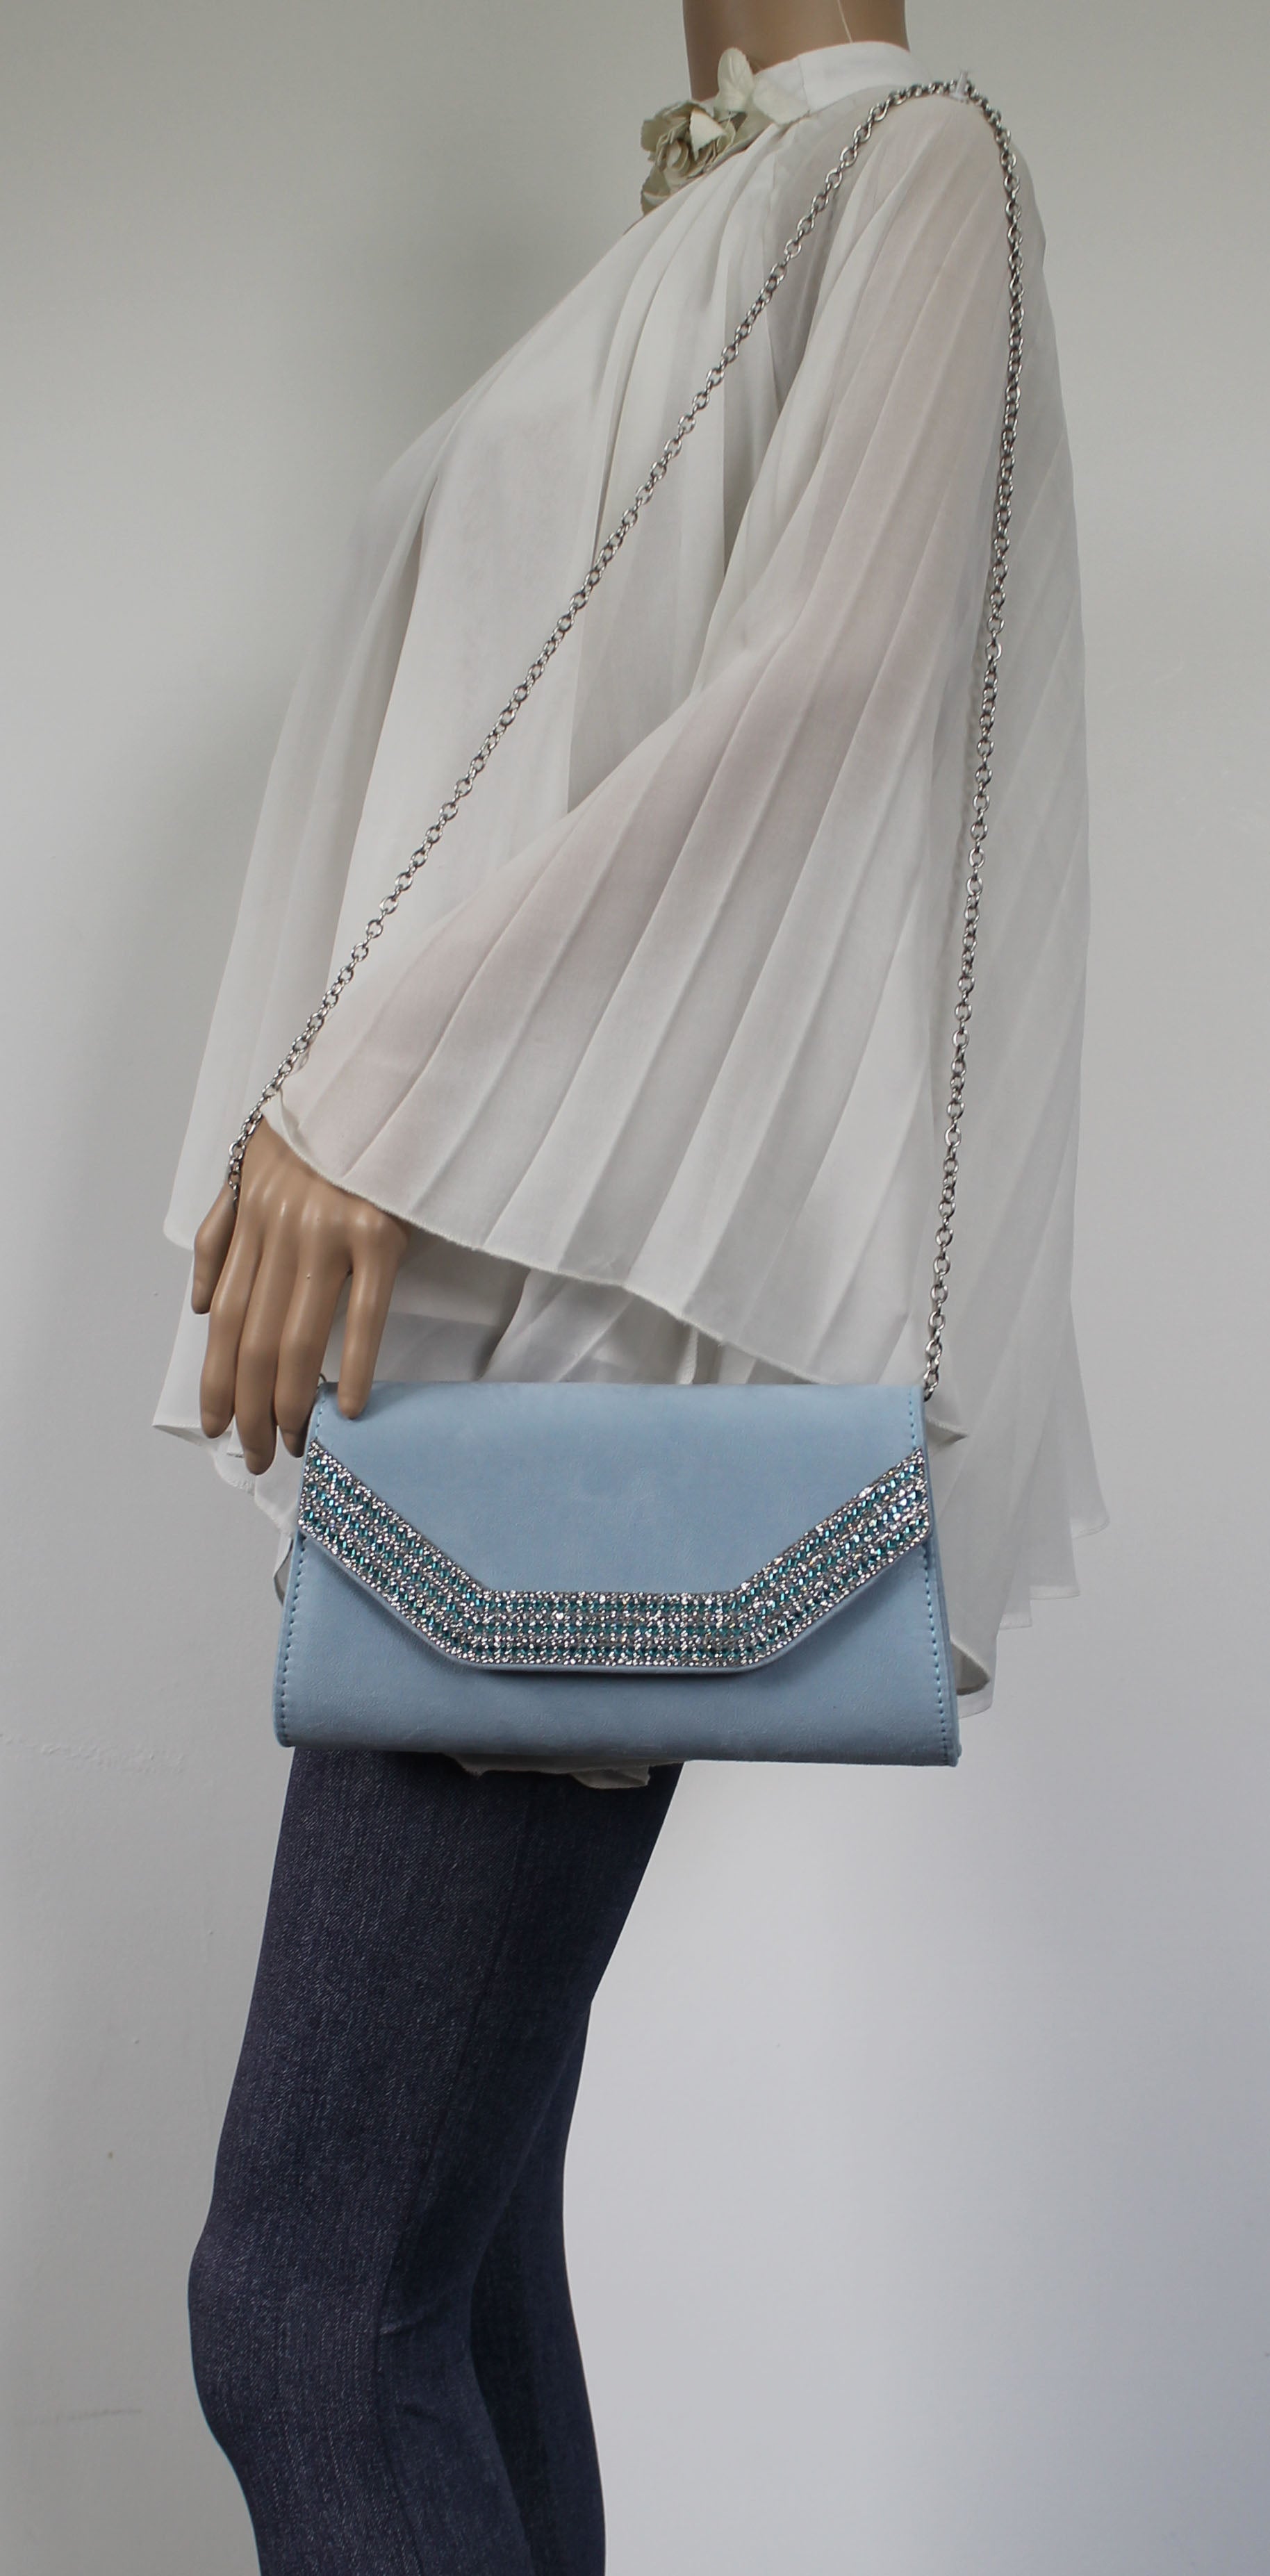 SWANKYSWANS Harper Clutch Bag Serenity Blue Cute Cheap Clutch Bag For Weddings School and Work